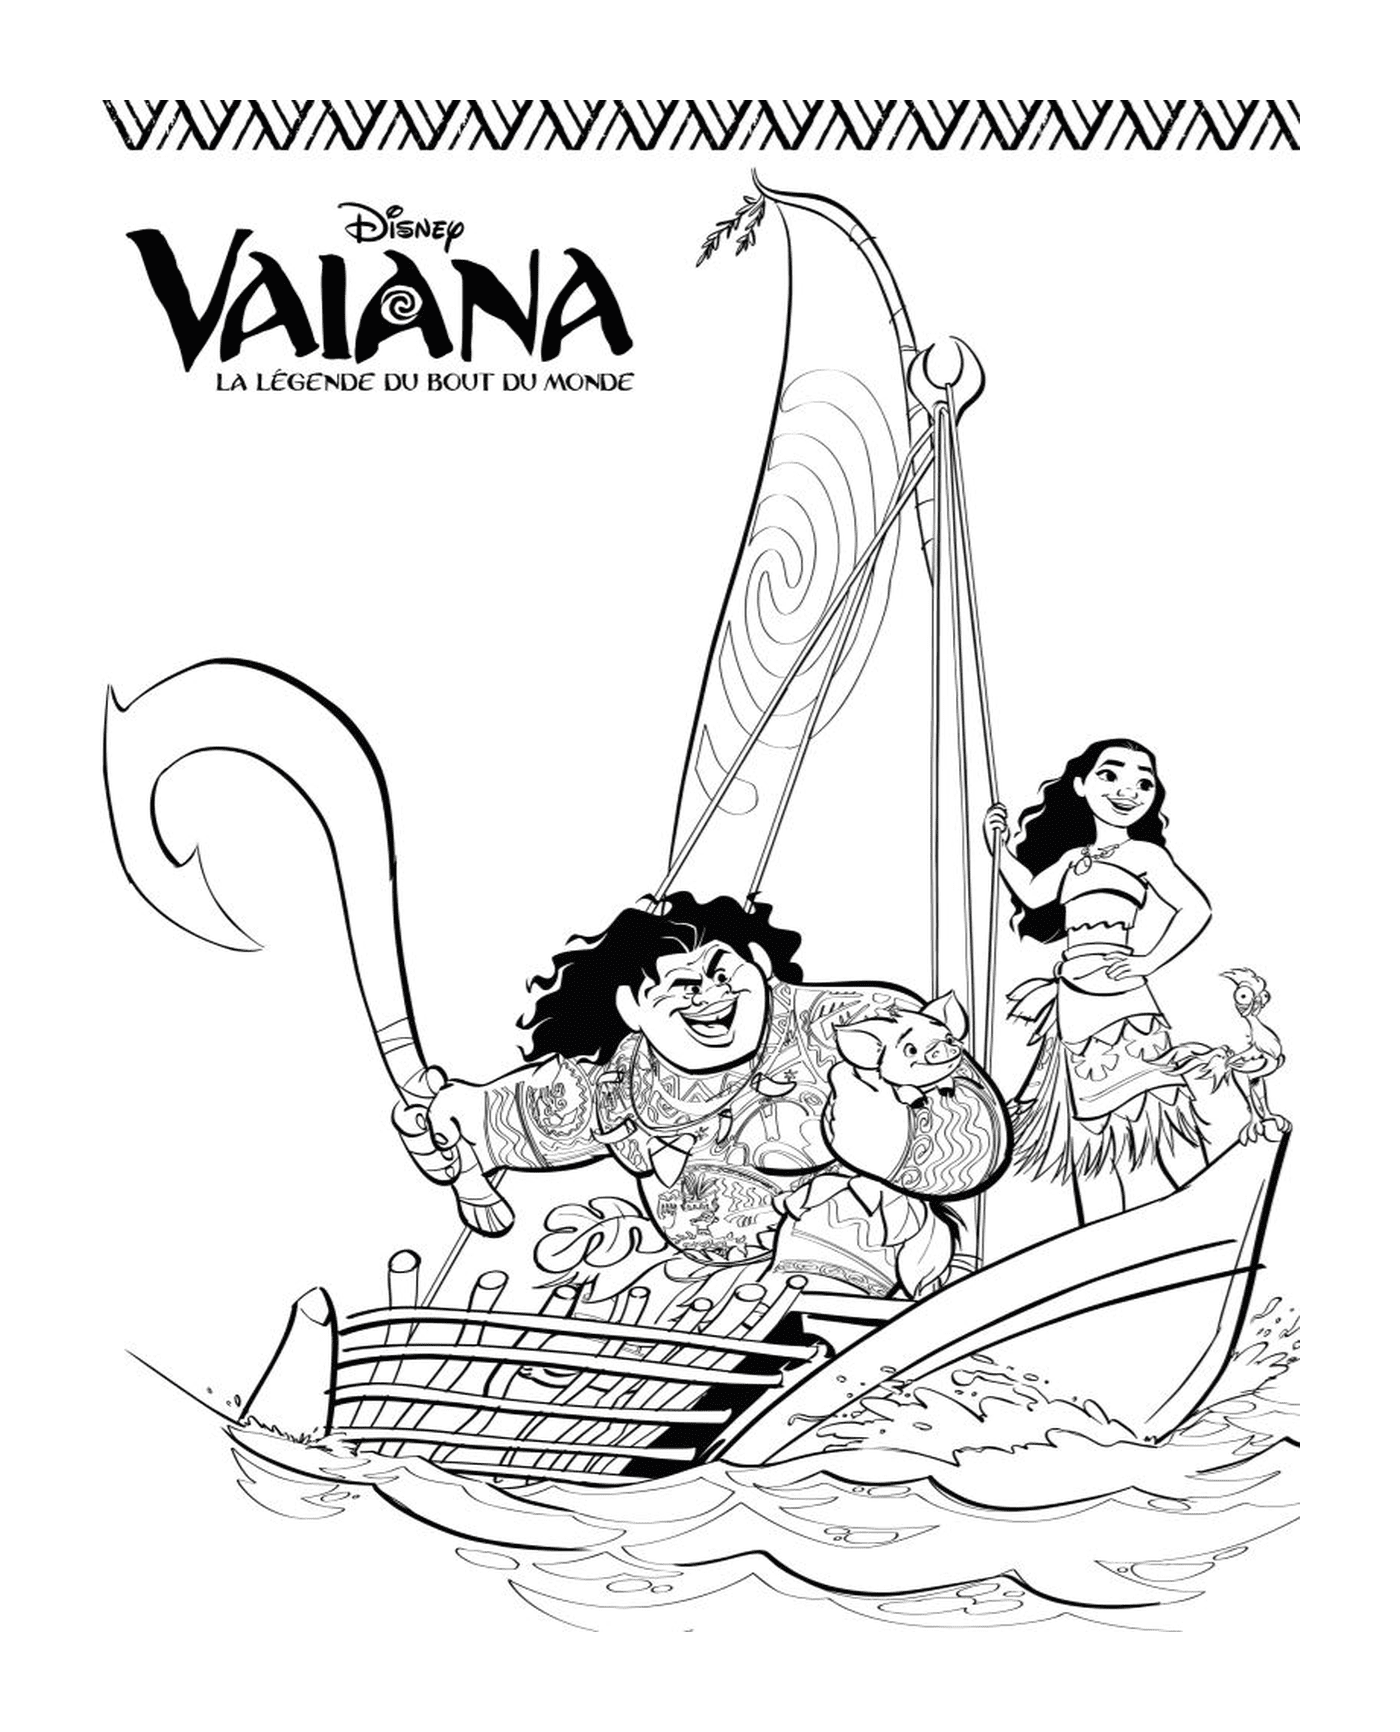  Vaiana and Maui on a sailboat 